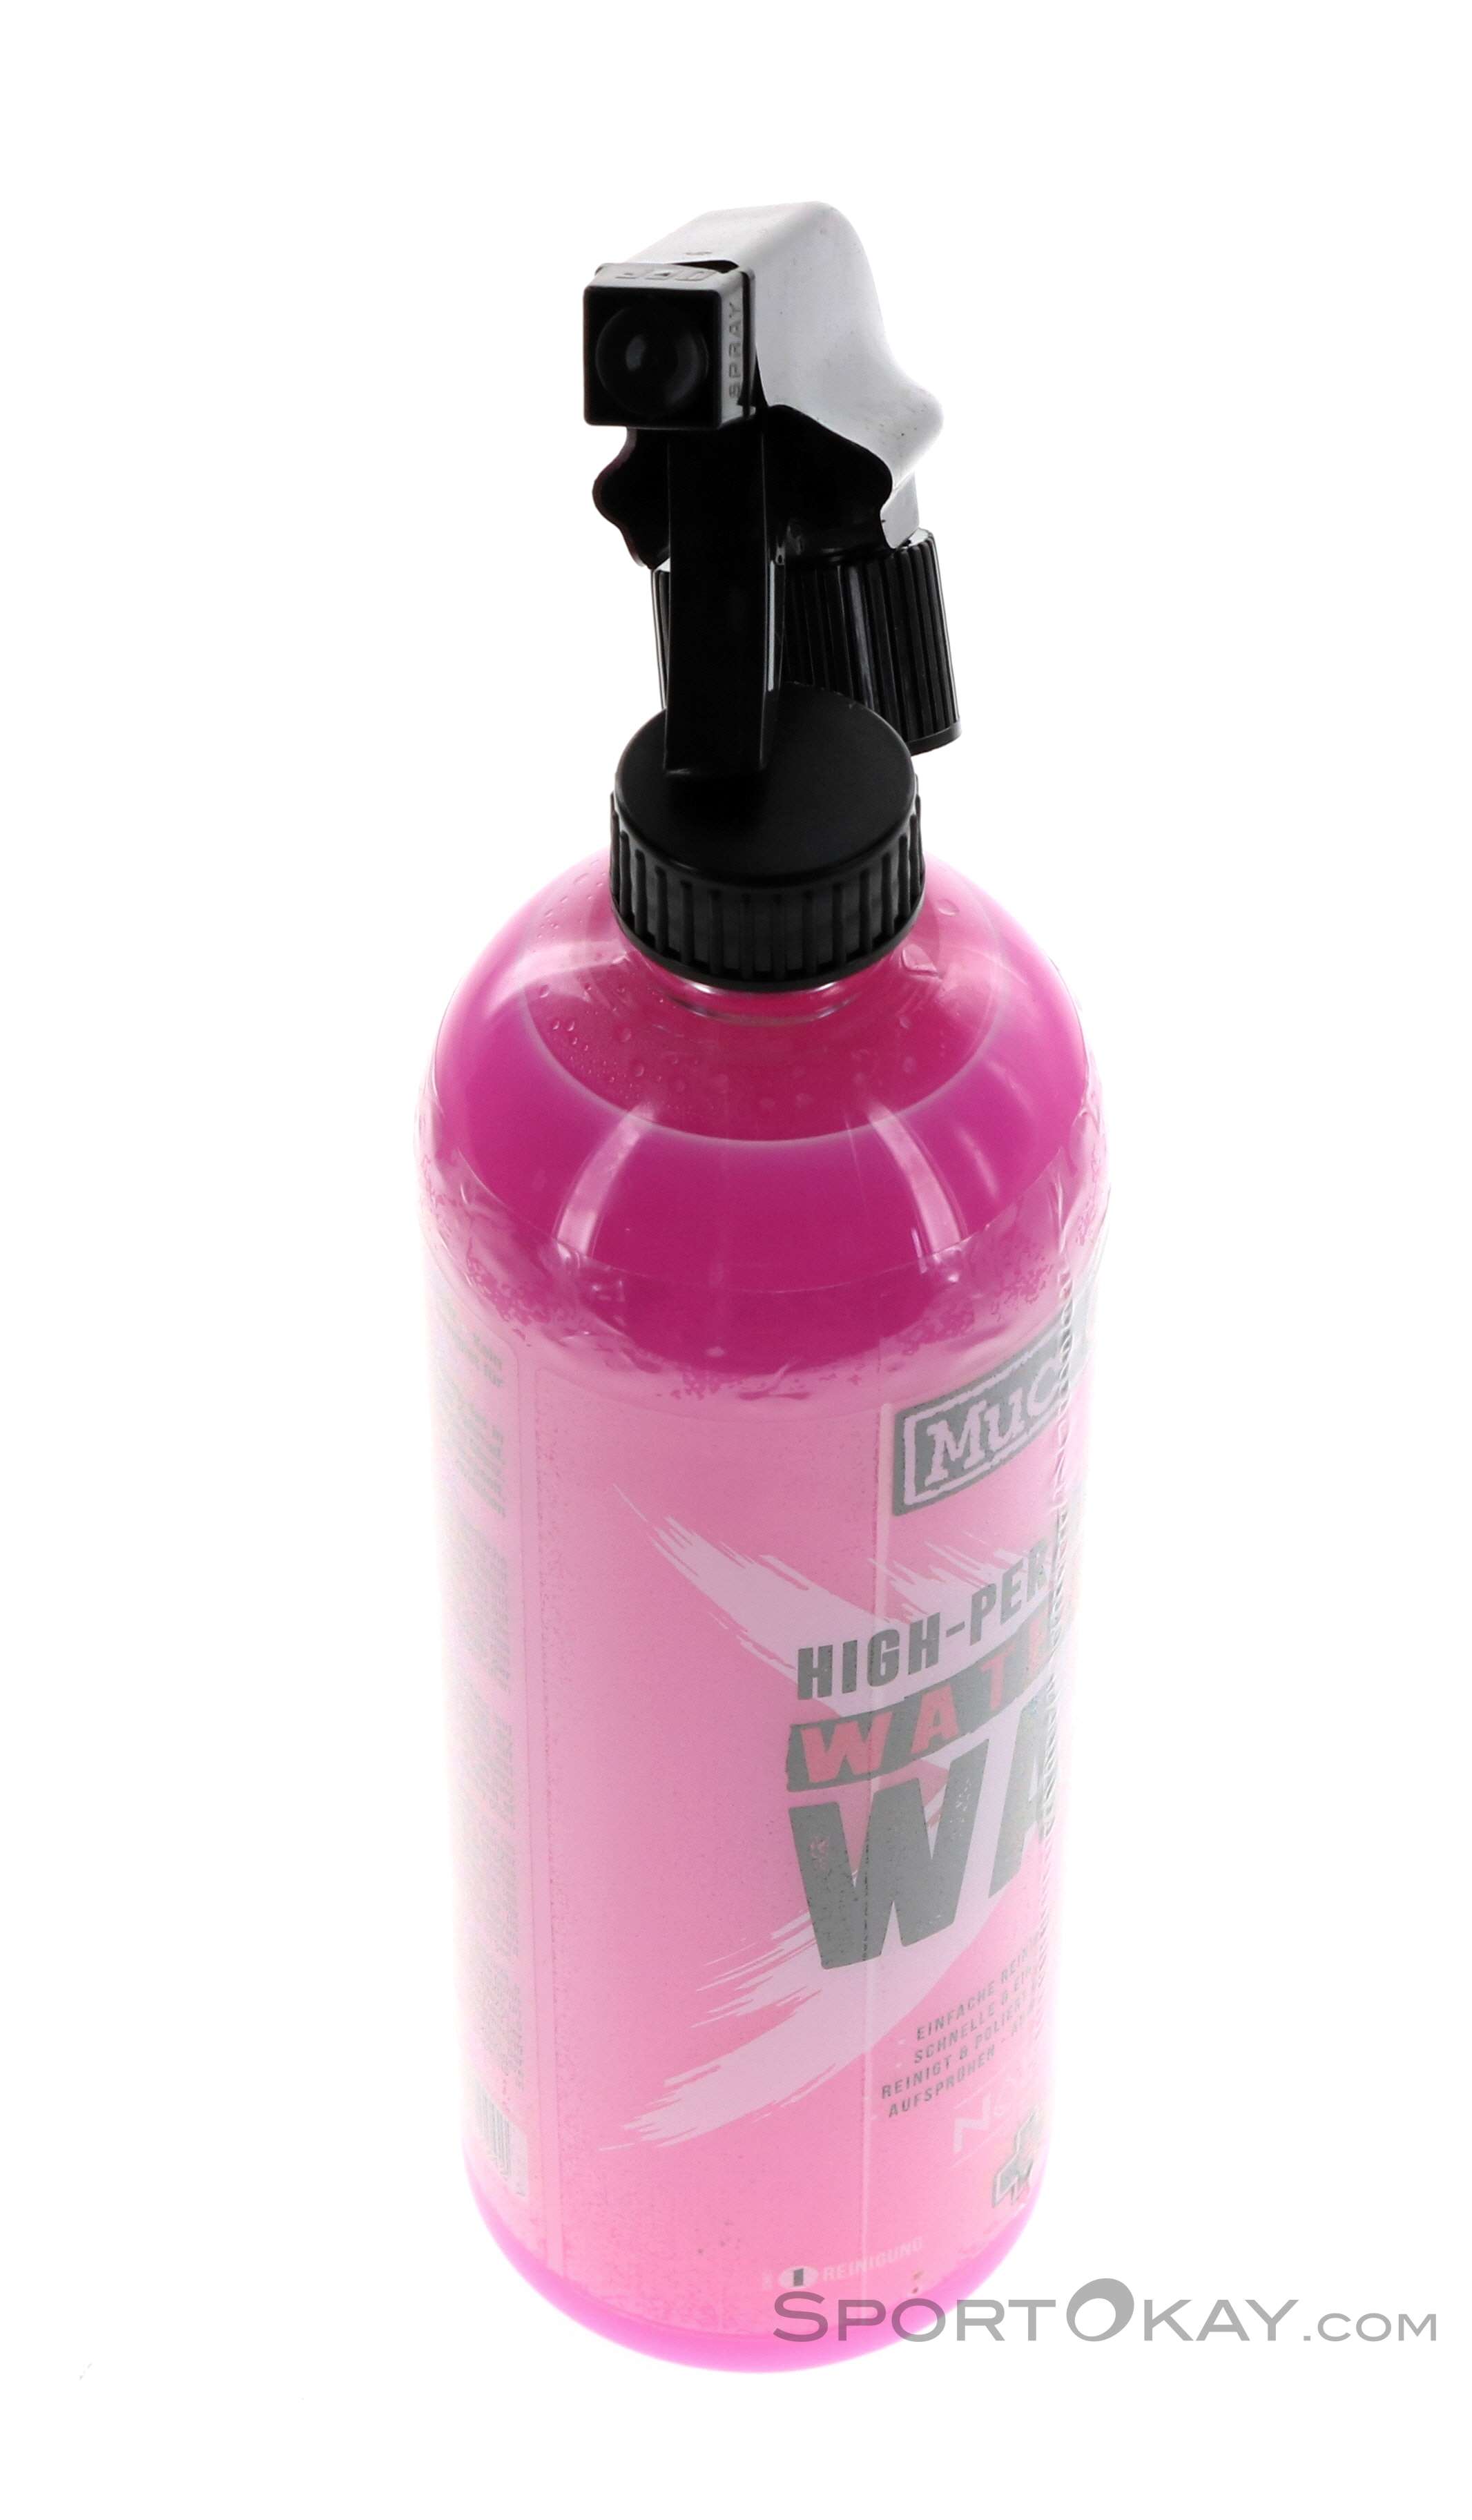 Muc-Off High Performance Waterless Wash - 750 ml